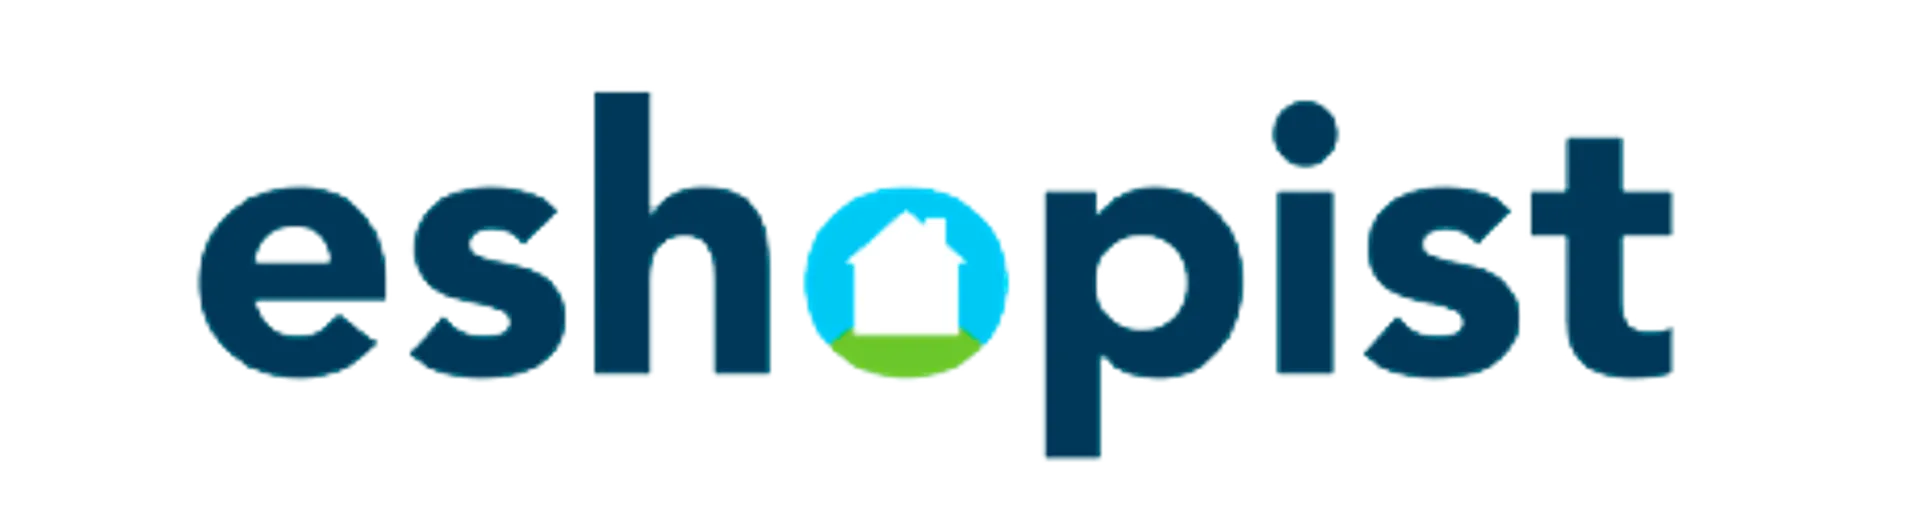 ESHOPIST logo